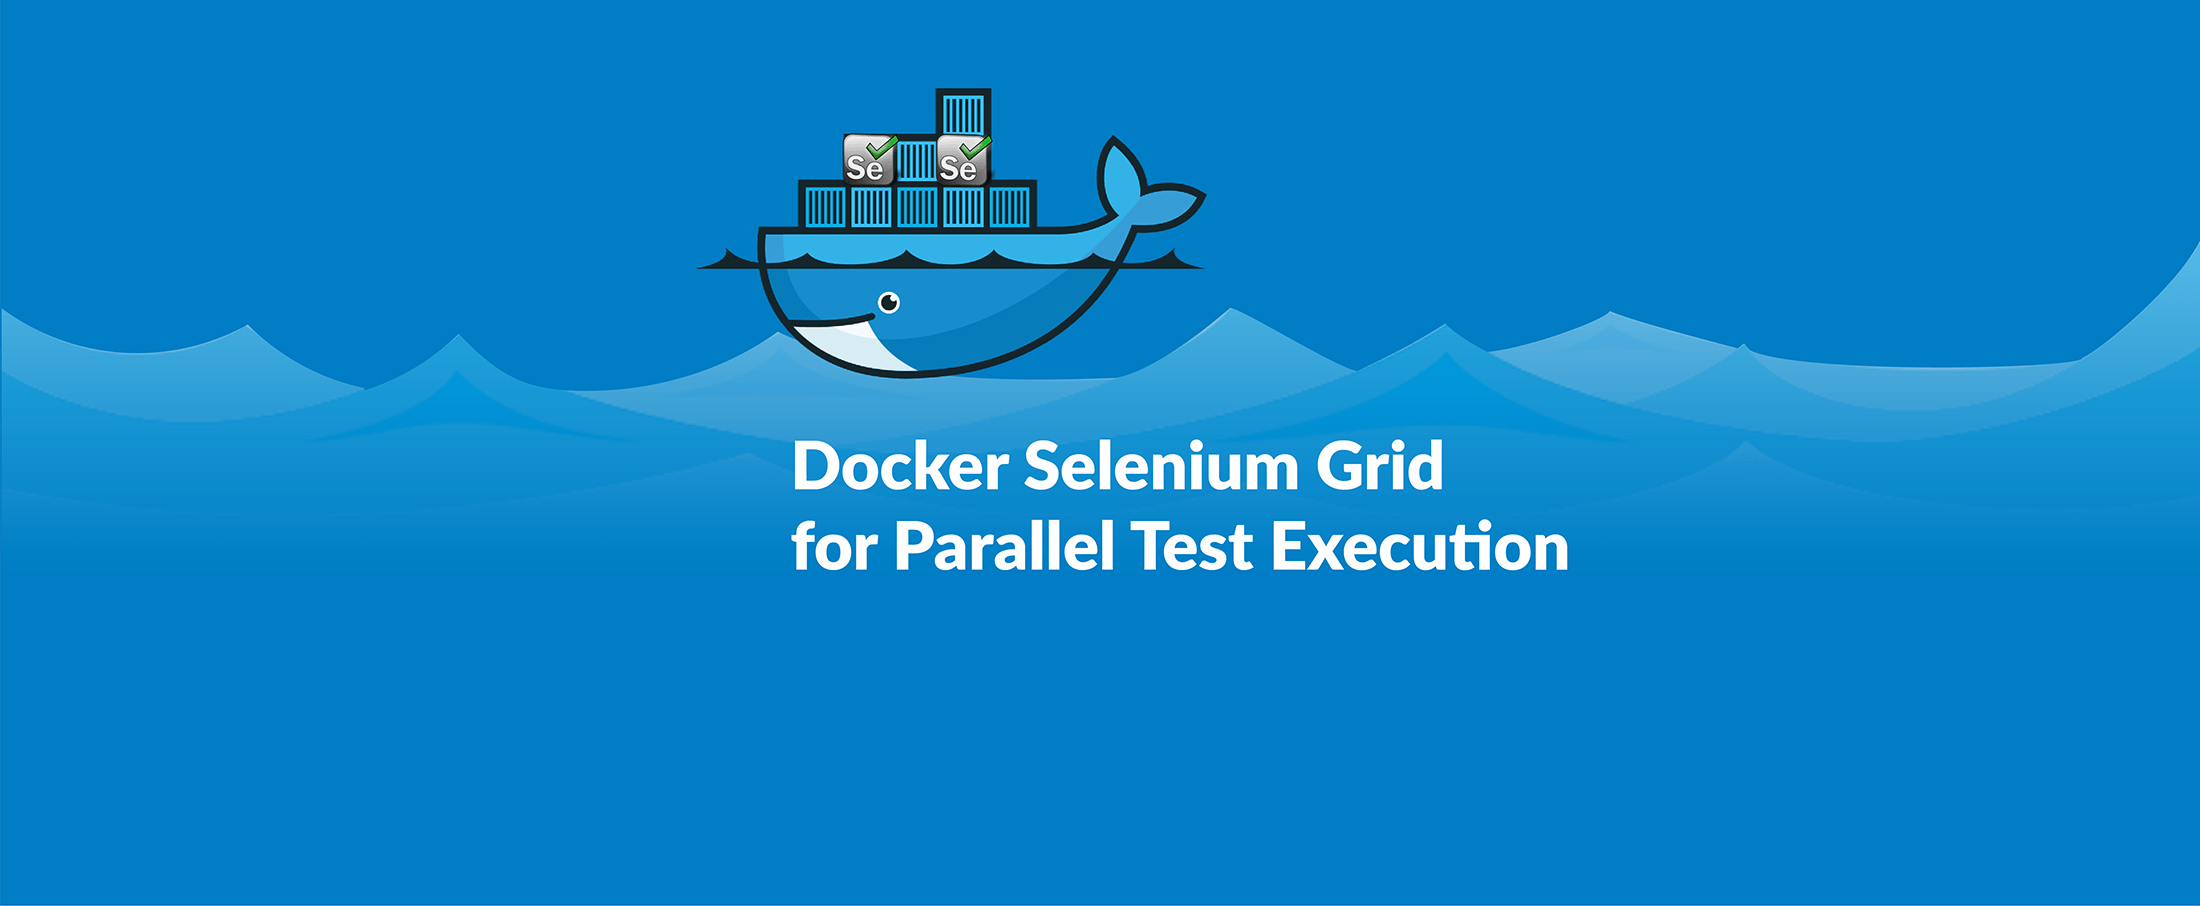 Docker Selenium Grid for Parallel Test Execution